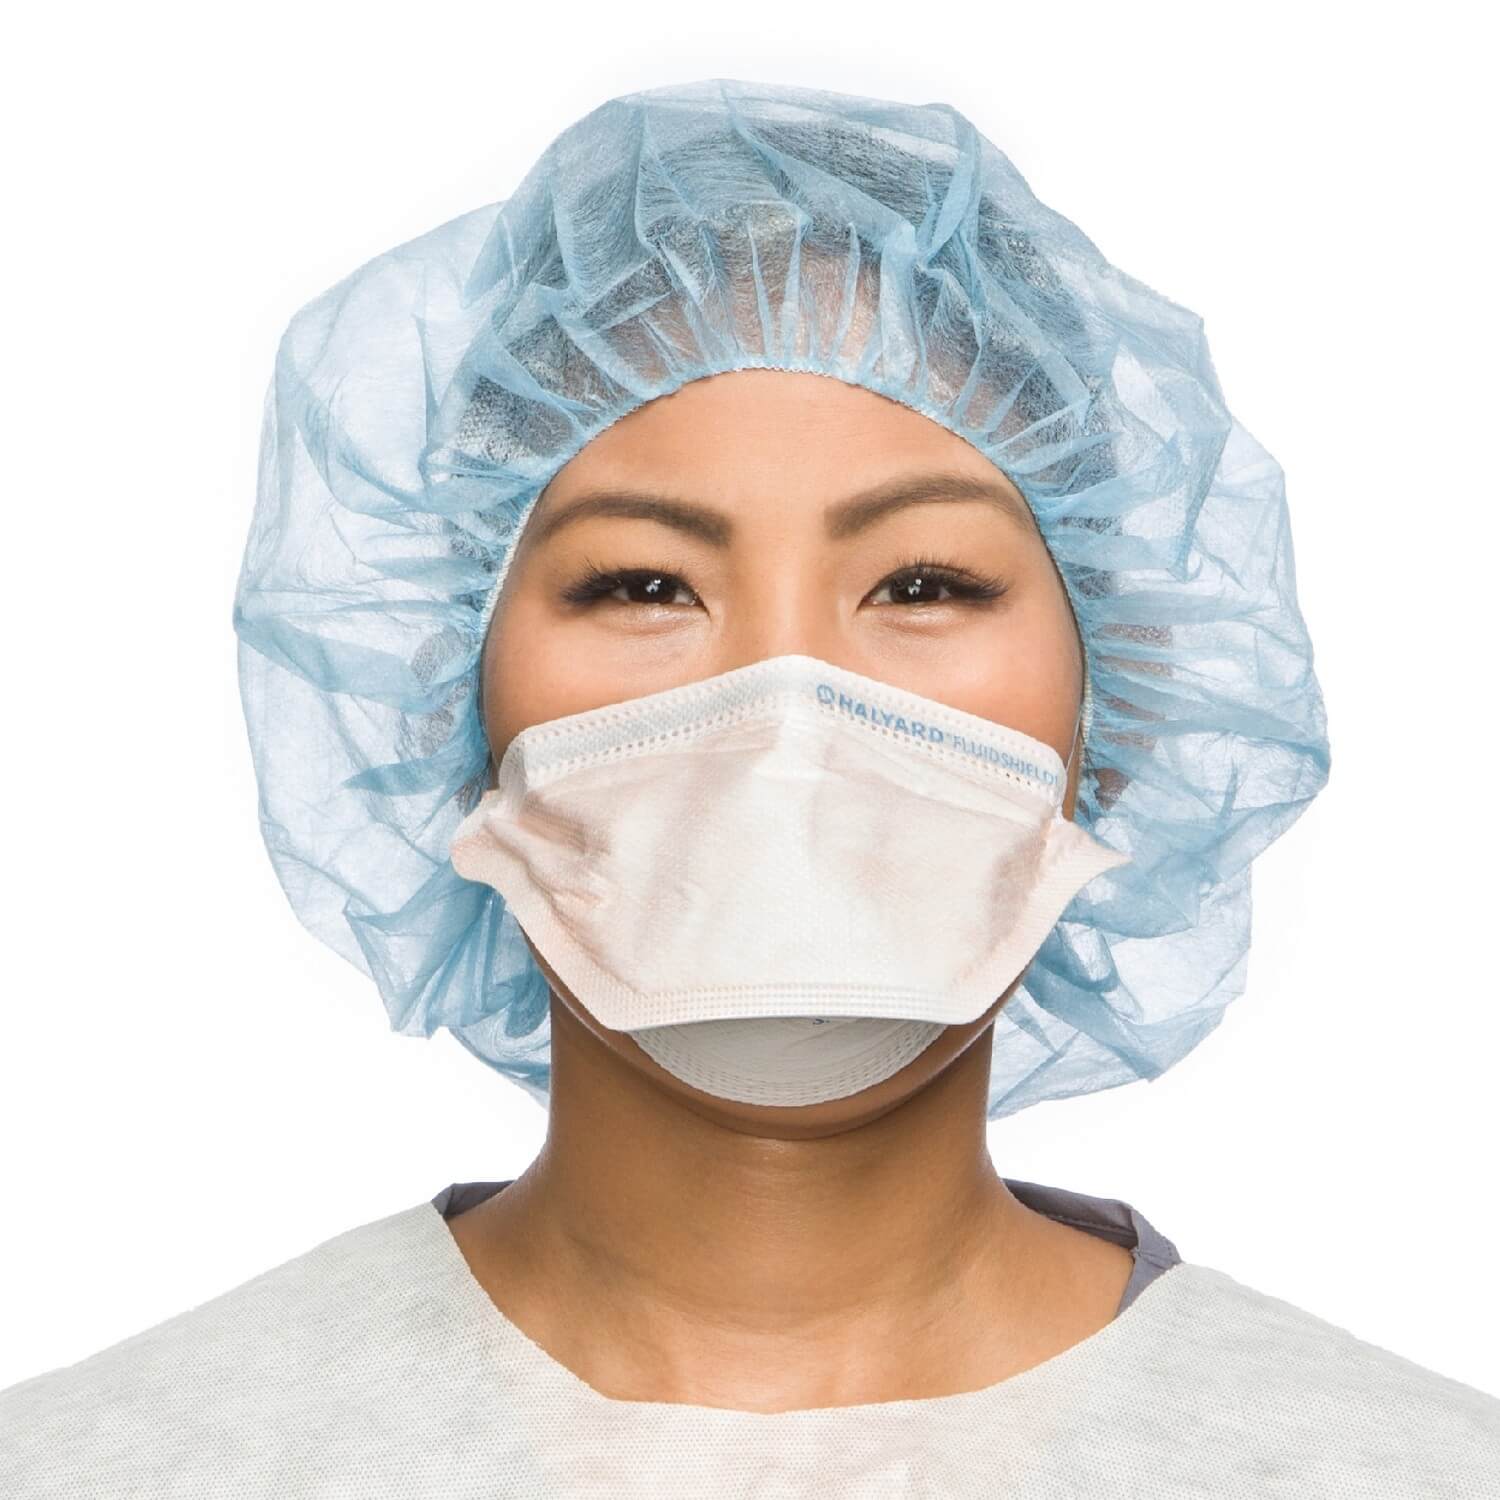 HALYARD FLUIDSHIELD Surgical N95 Respirators, ASTM Level 3 Face Mask, Regular Size, 46727 (Box of 35)